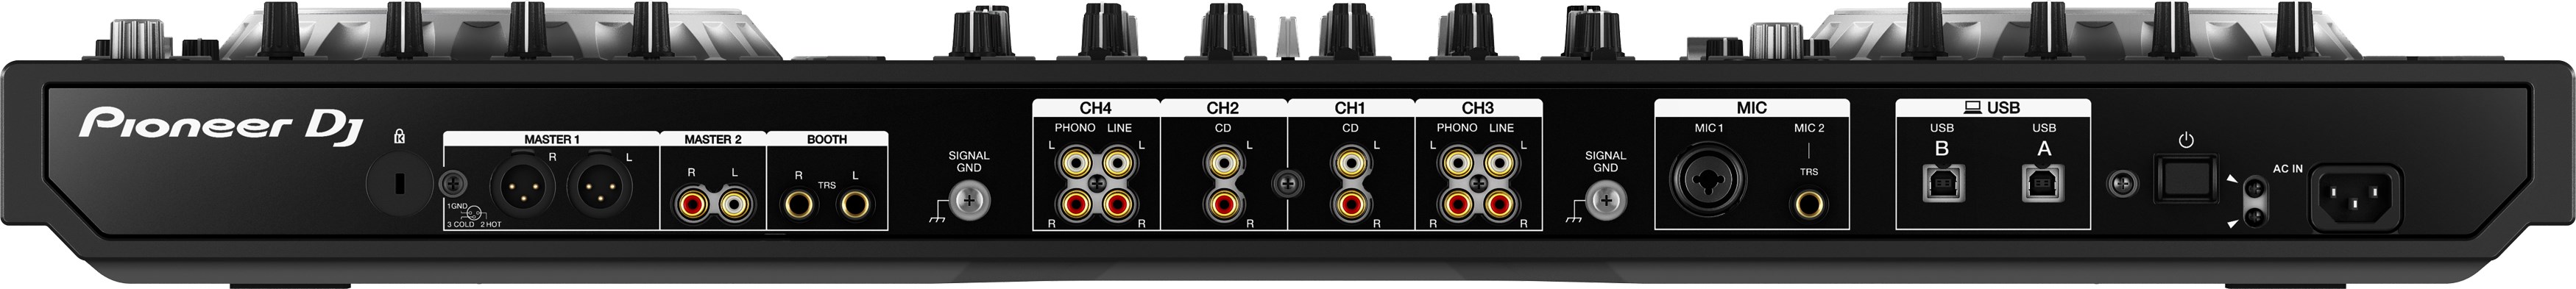 Pioneer Dj Ddj-sz2 - Controlador DJ USB - Variation 3